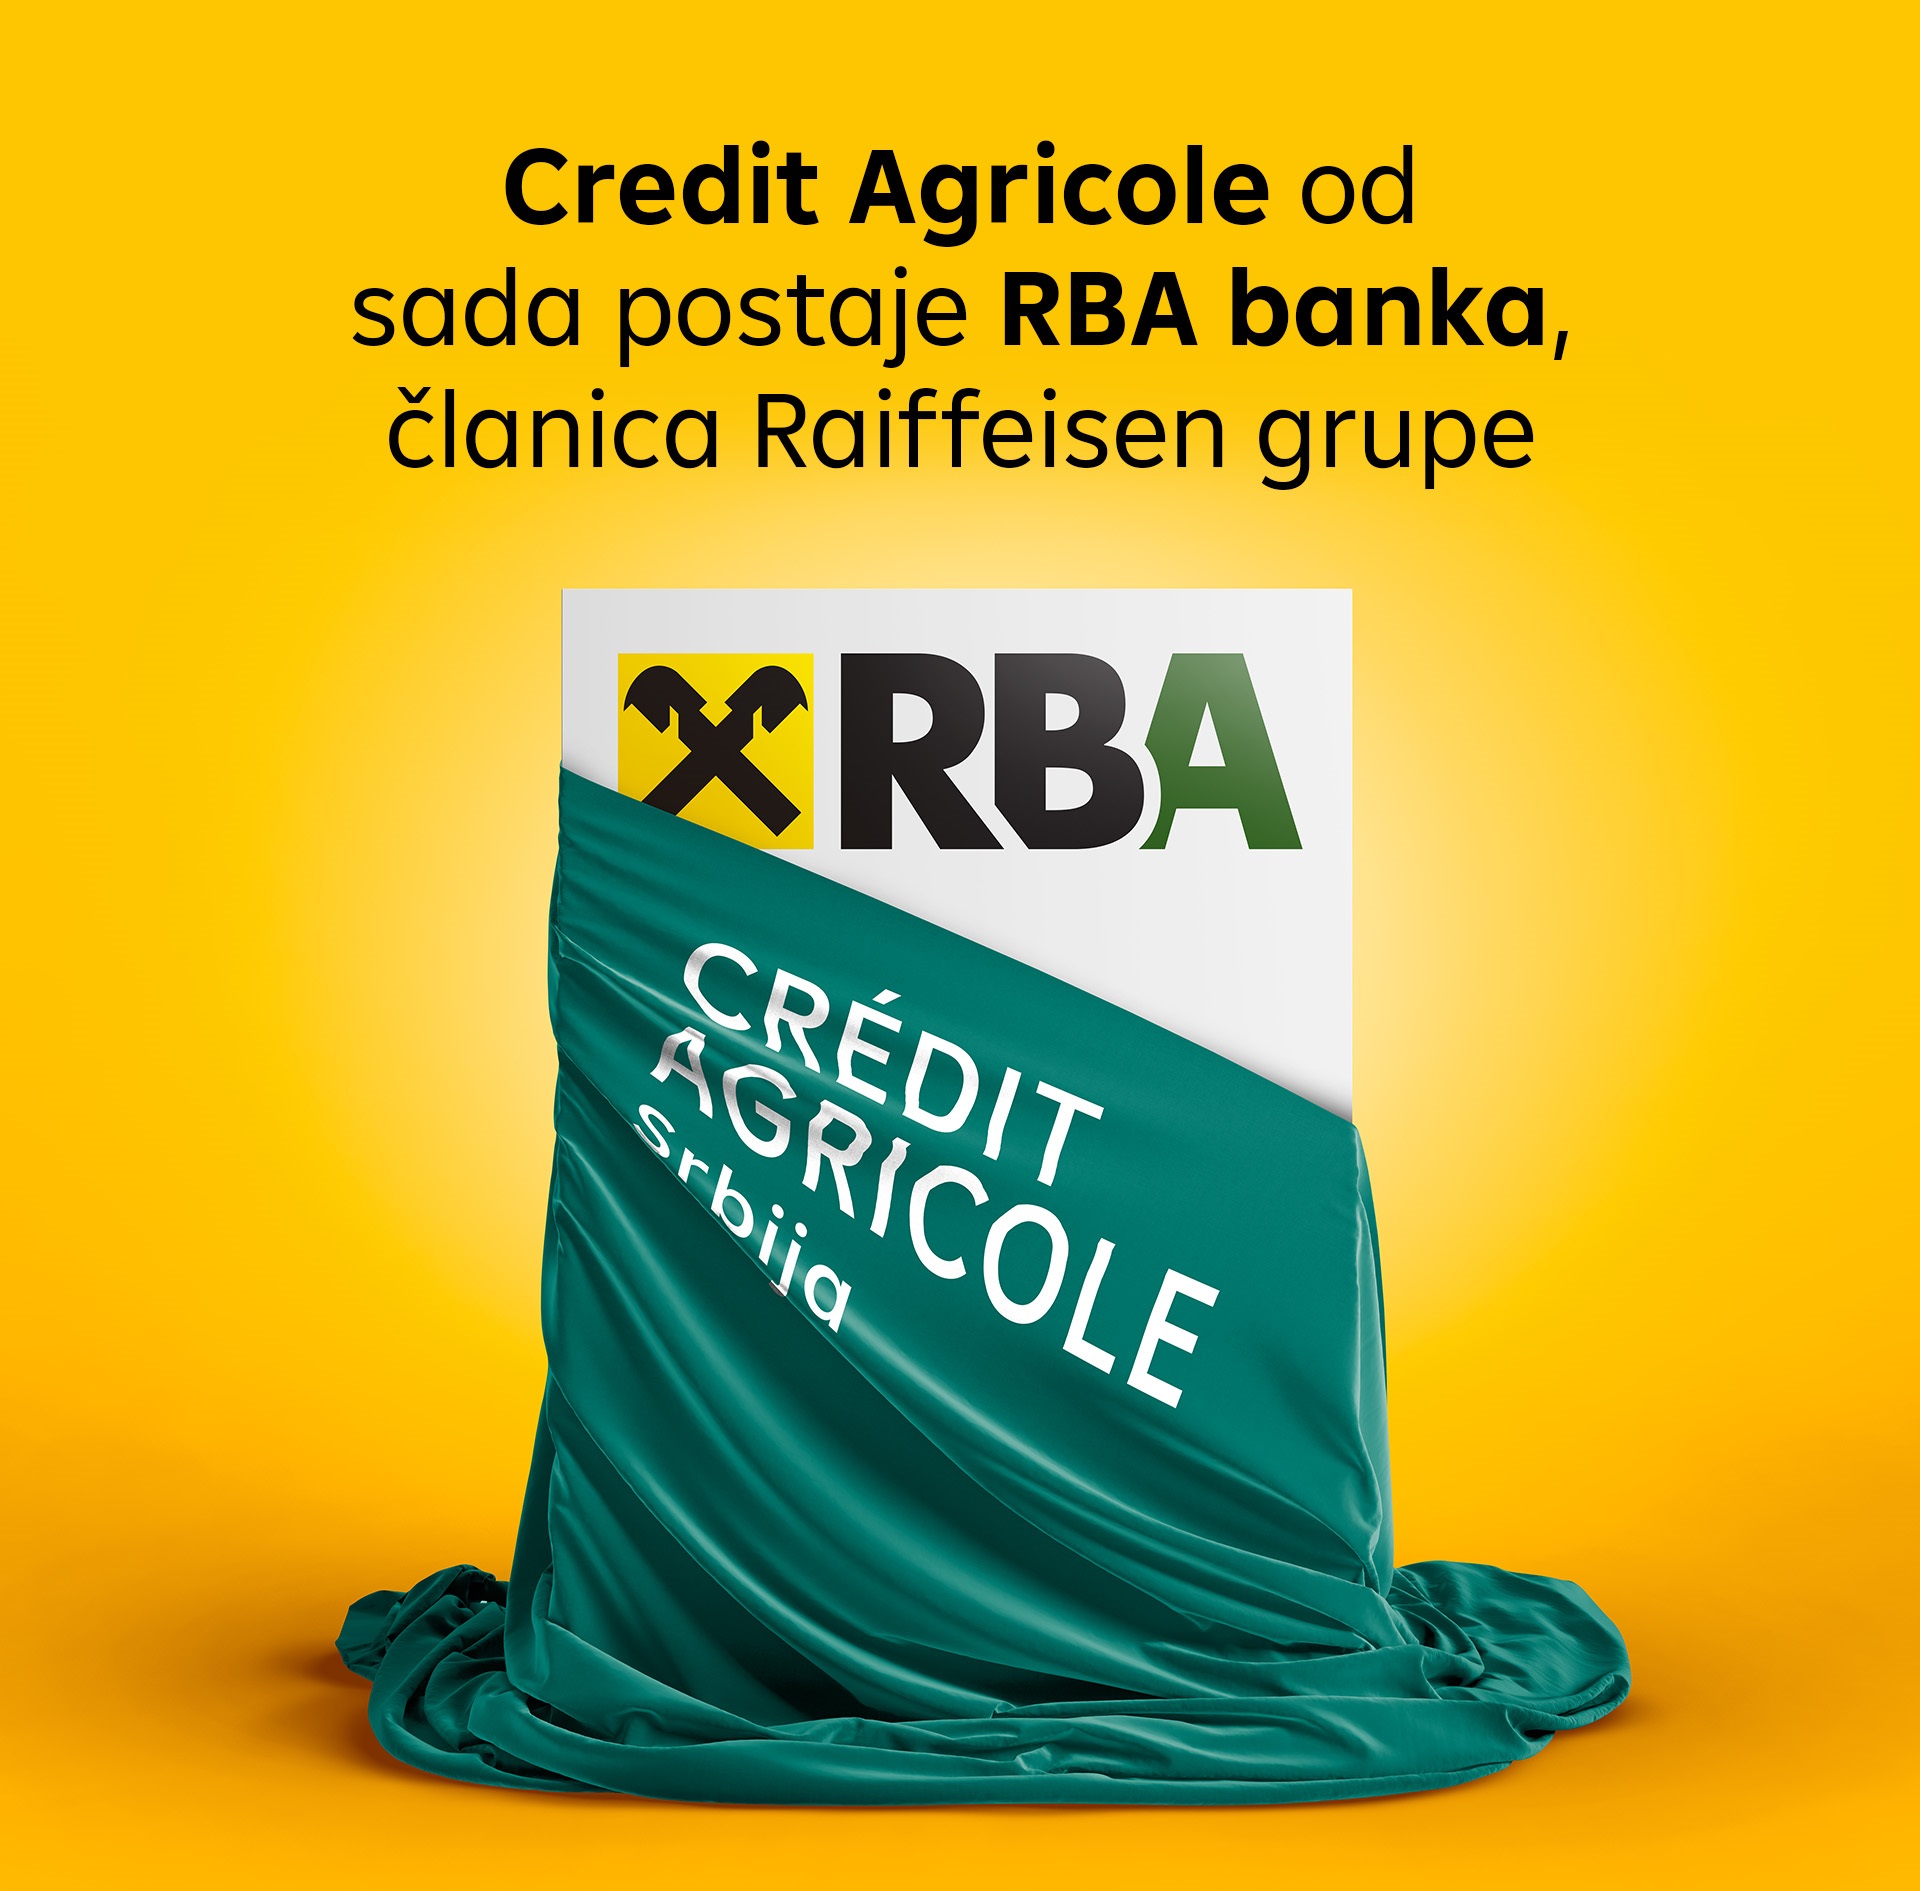 Crédit Agricole Srbija postala RBA banka - Promena imena deo procesa pripajanja Raiffeisen banci